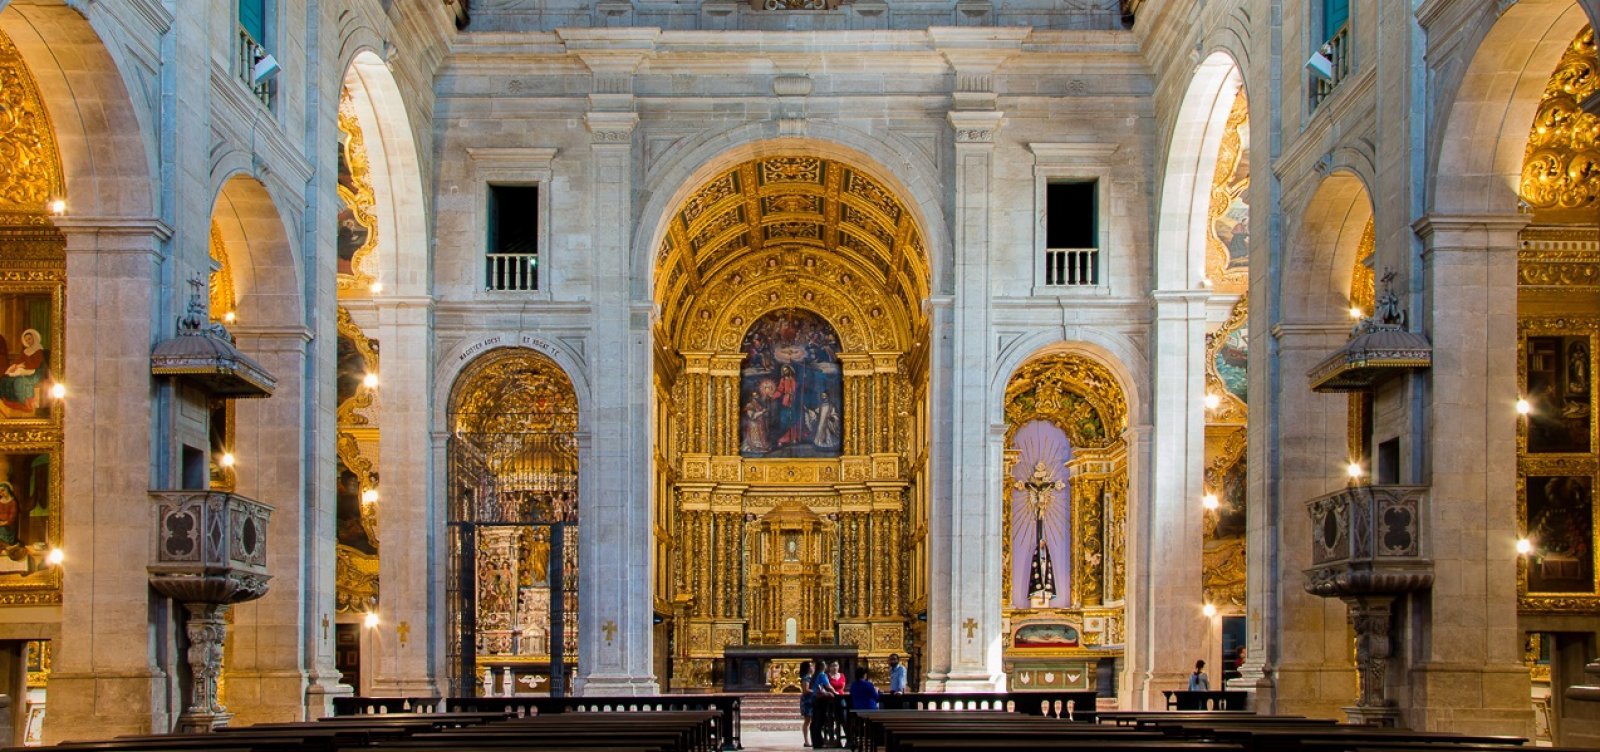 Catedral Basílica de Salvador realiza concertos natalinos a partir deste domingo